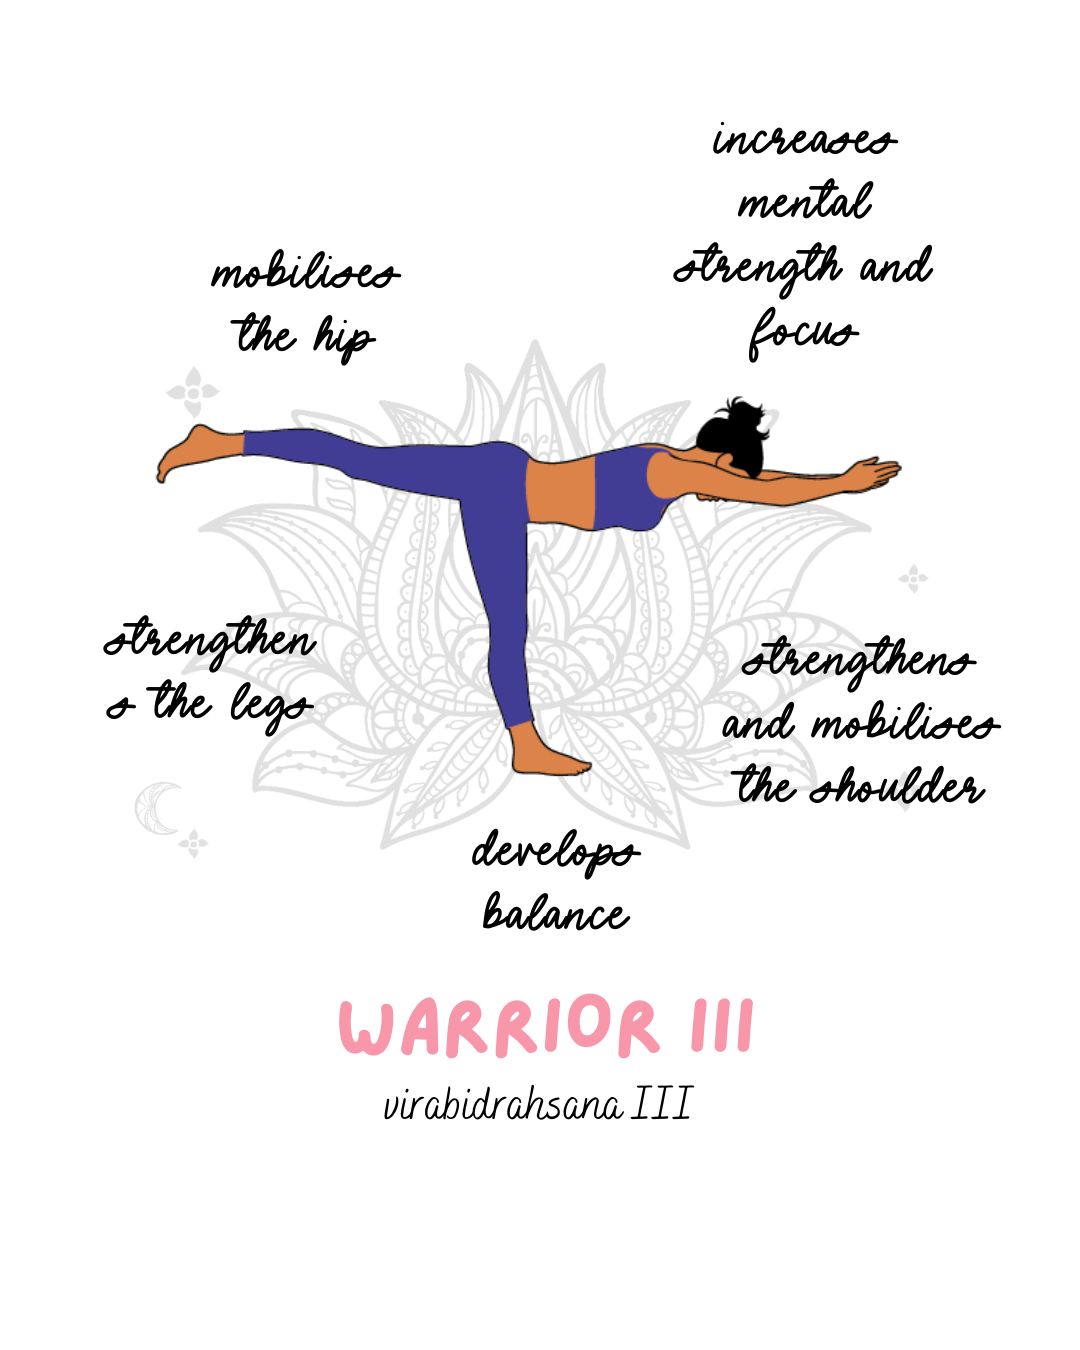 Warrior III pose benefits